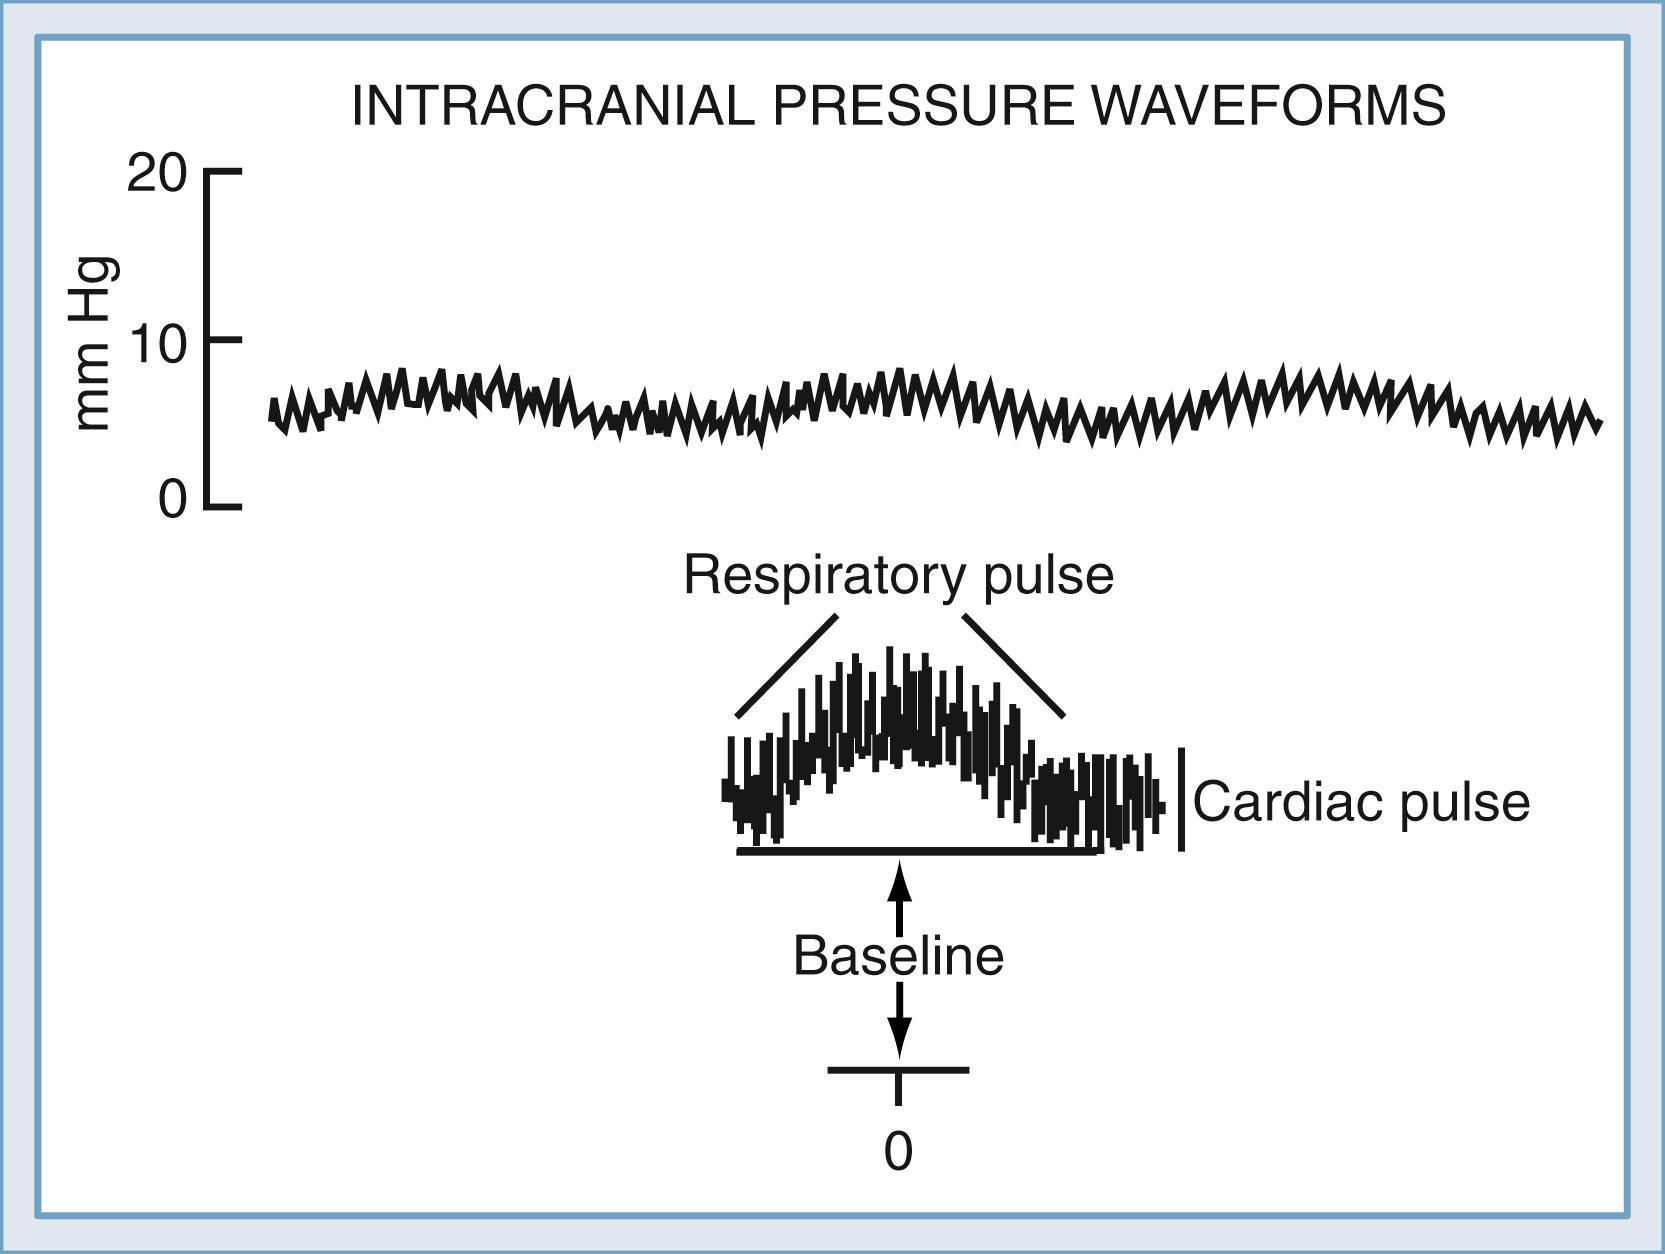 Figure 69.1, Normal intracranial pressure (ICP) waveform.